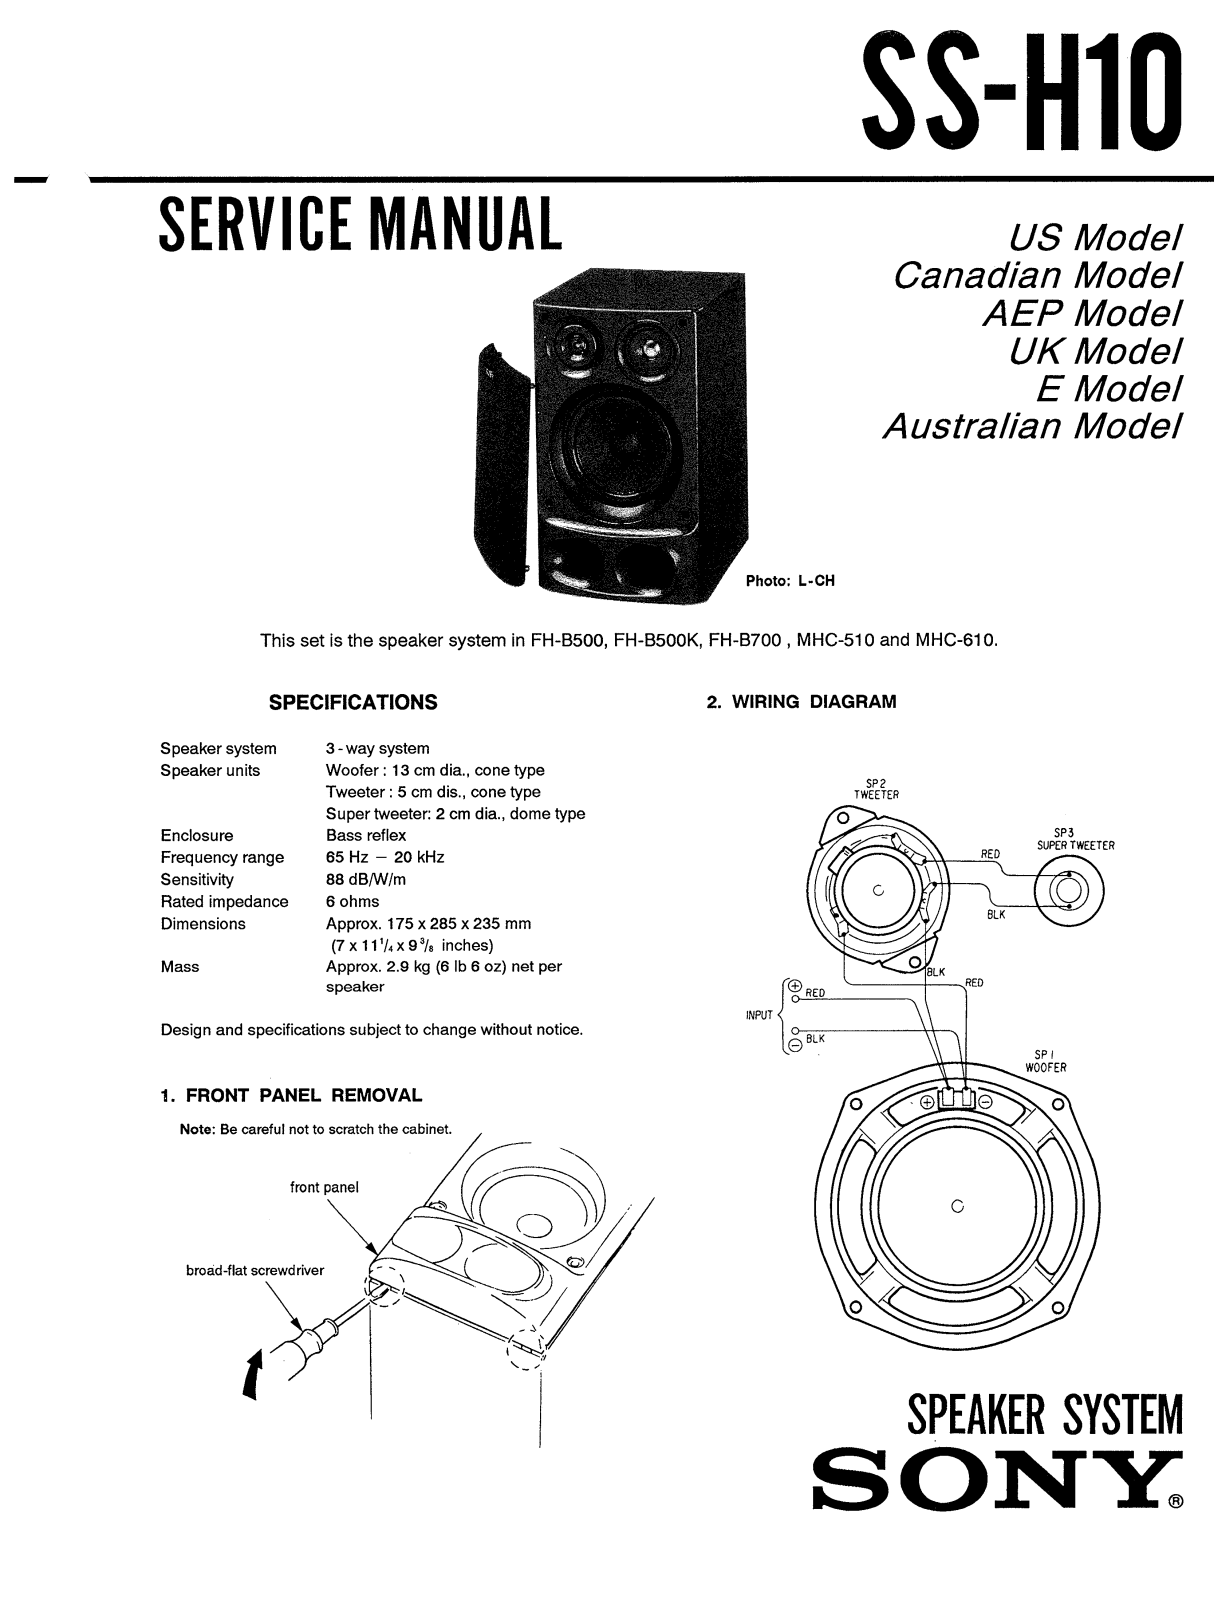 SONY SS-H10 User Manual